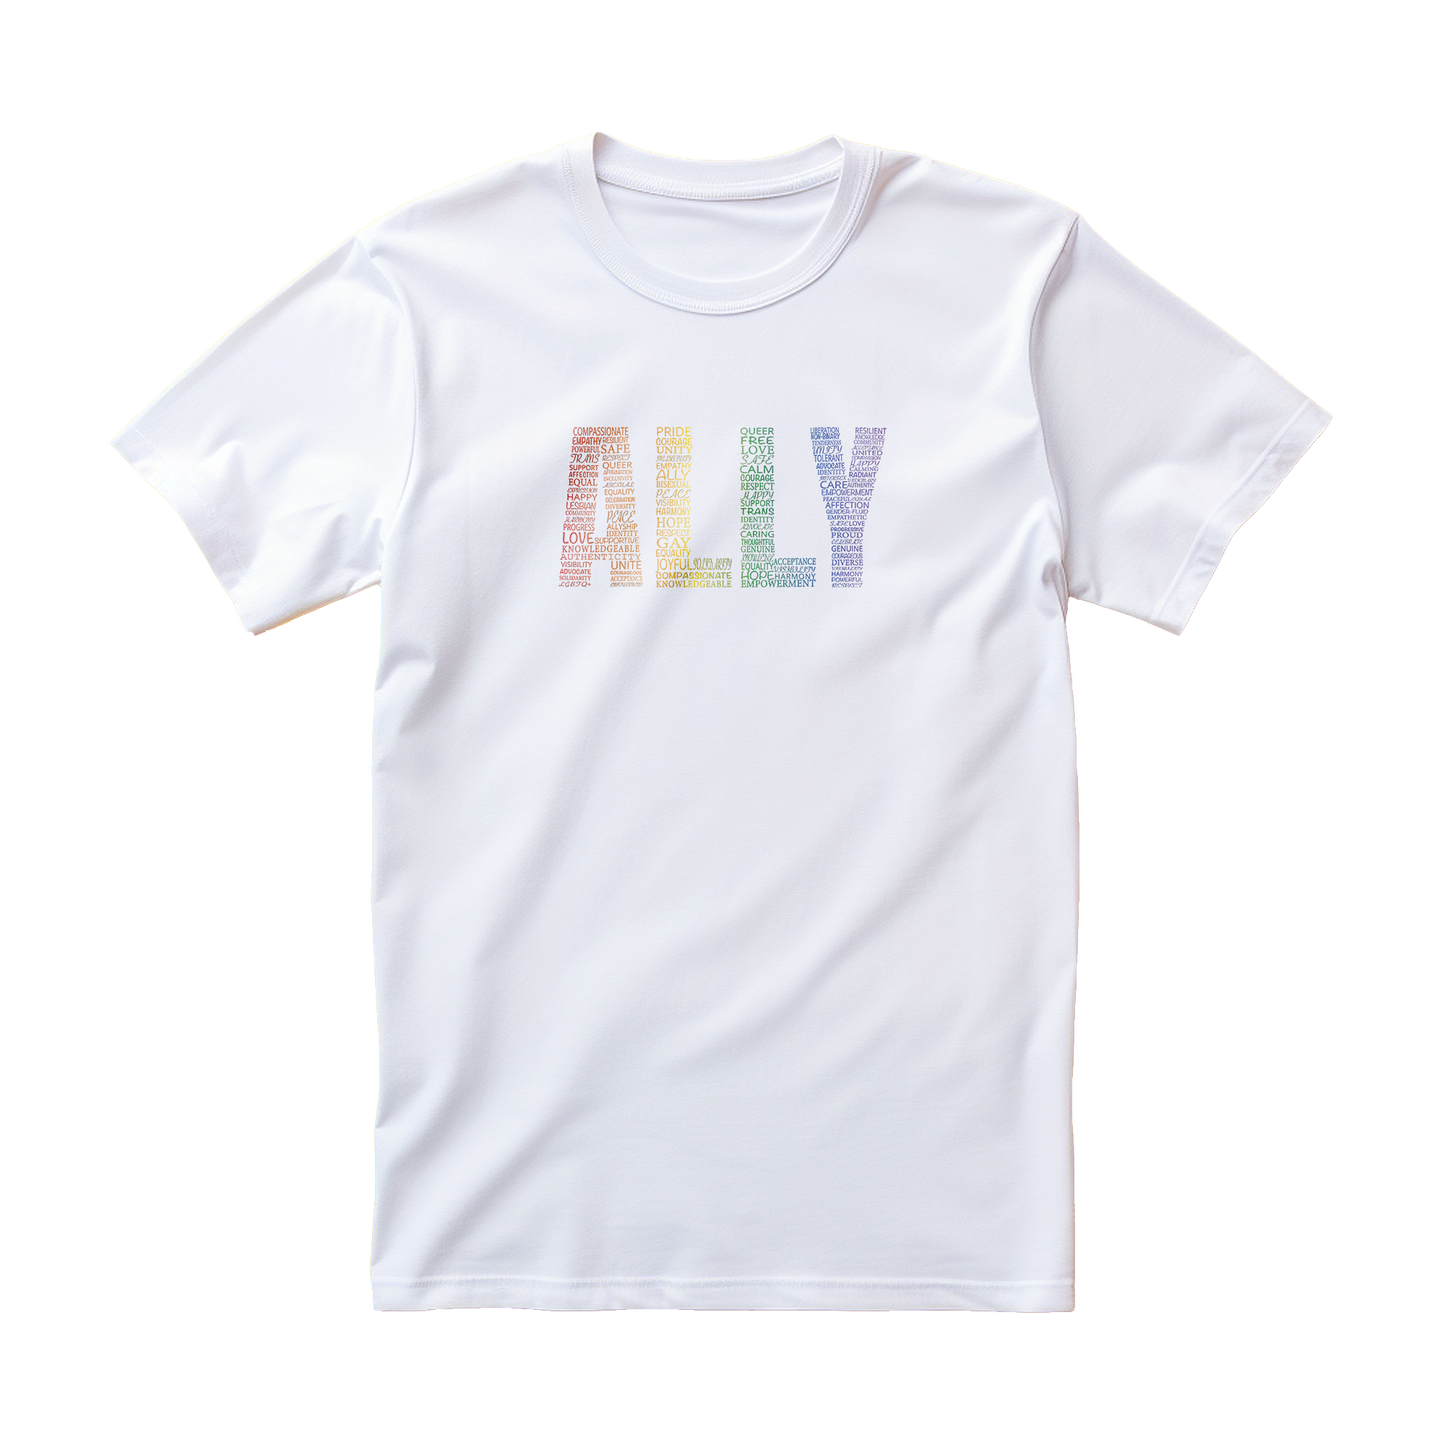 Ally T-Shirt